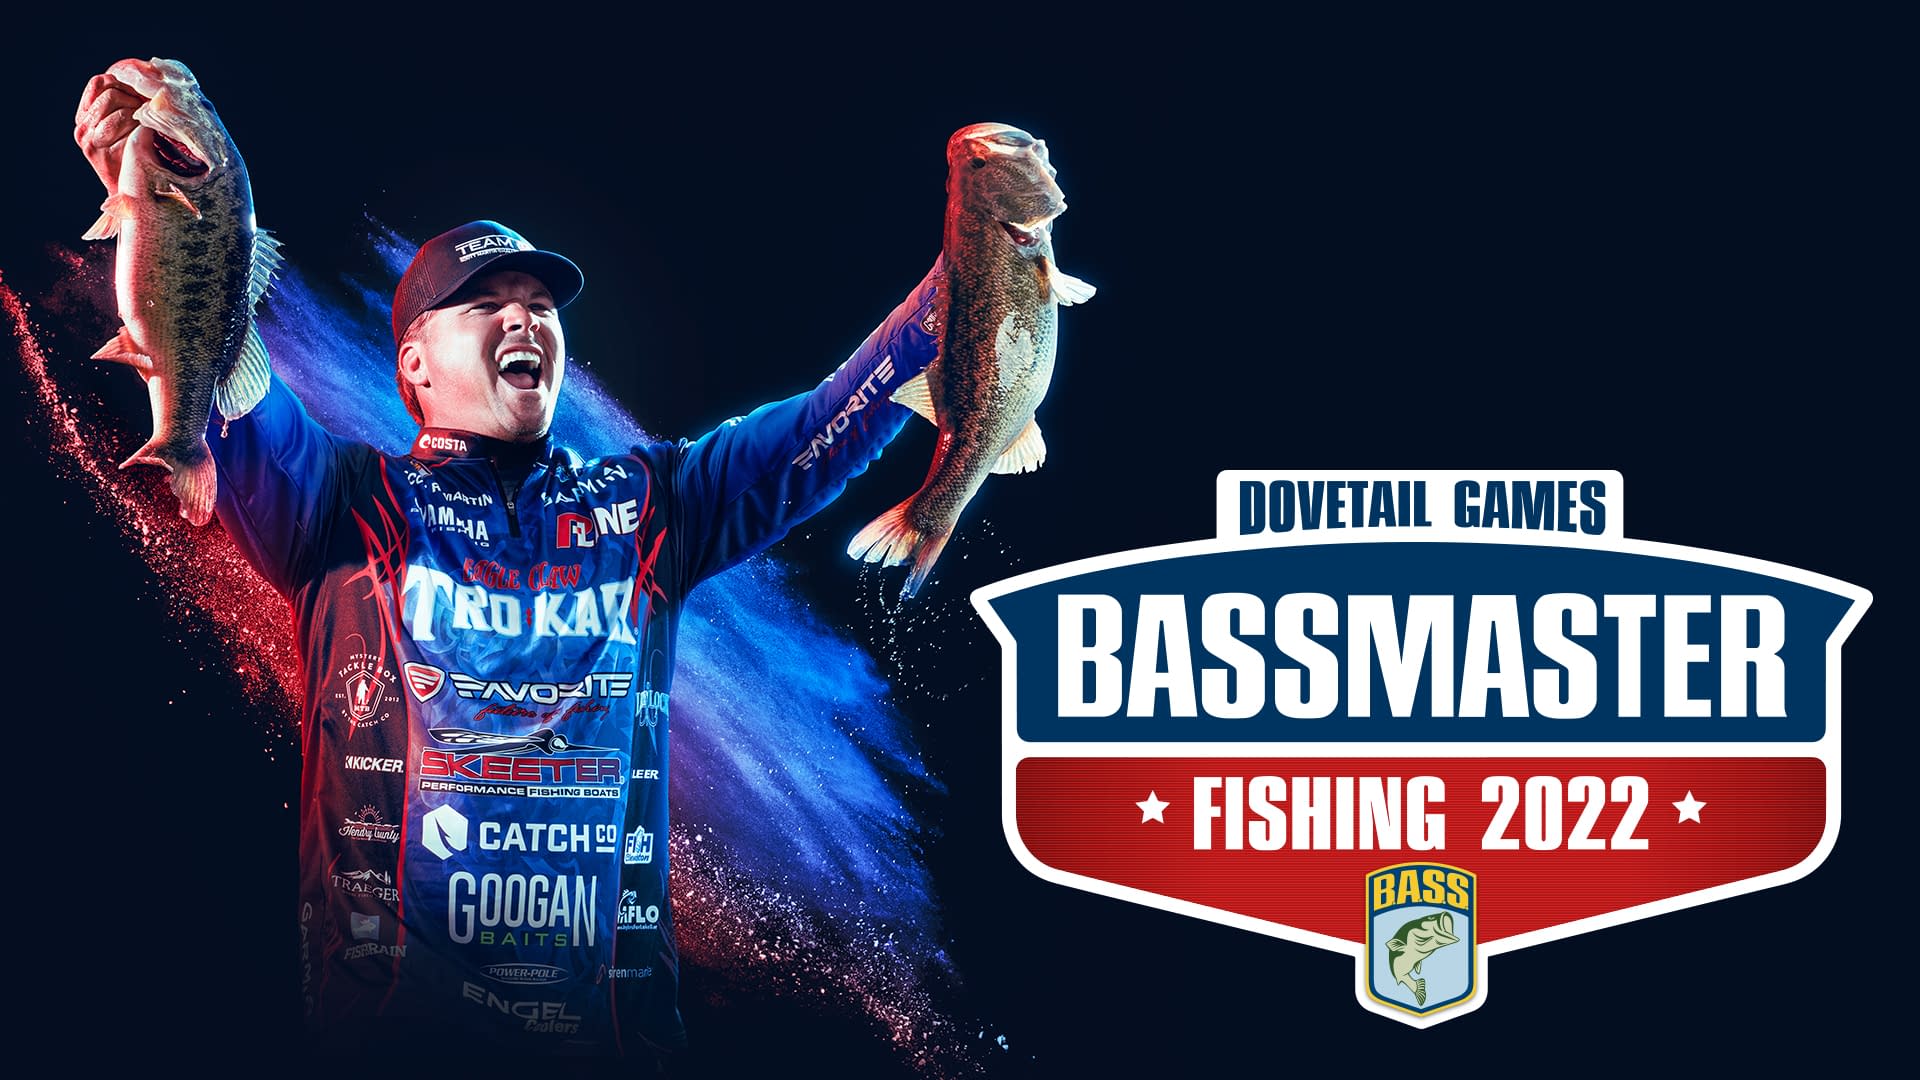 Bassmaster Fishing 2022 Reveals Ten Playable Pro-Anglers